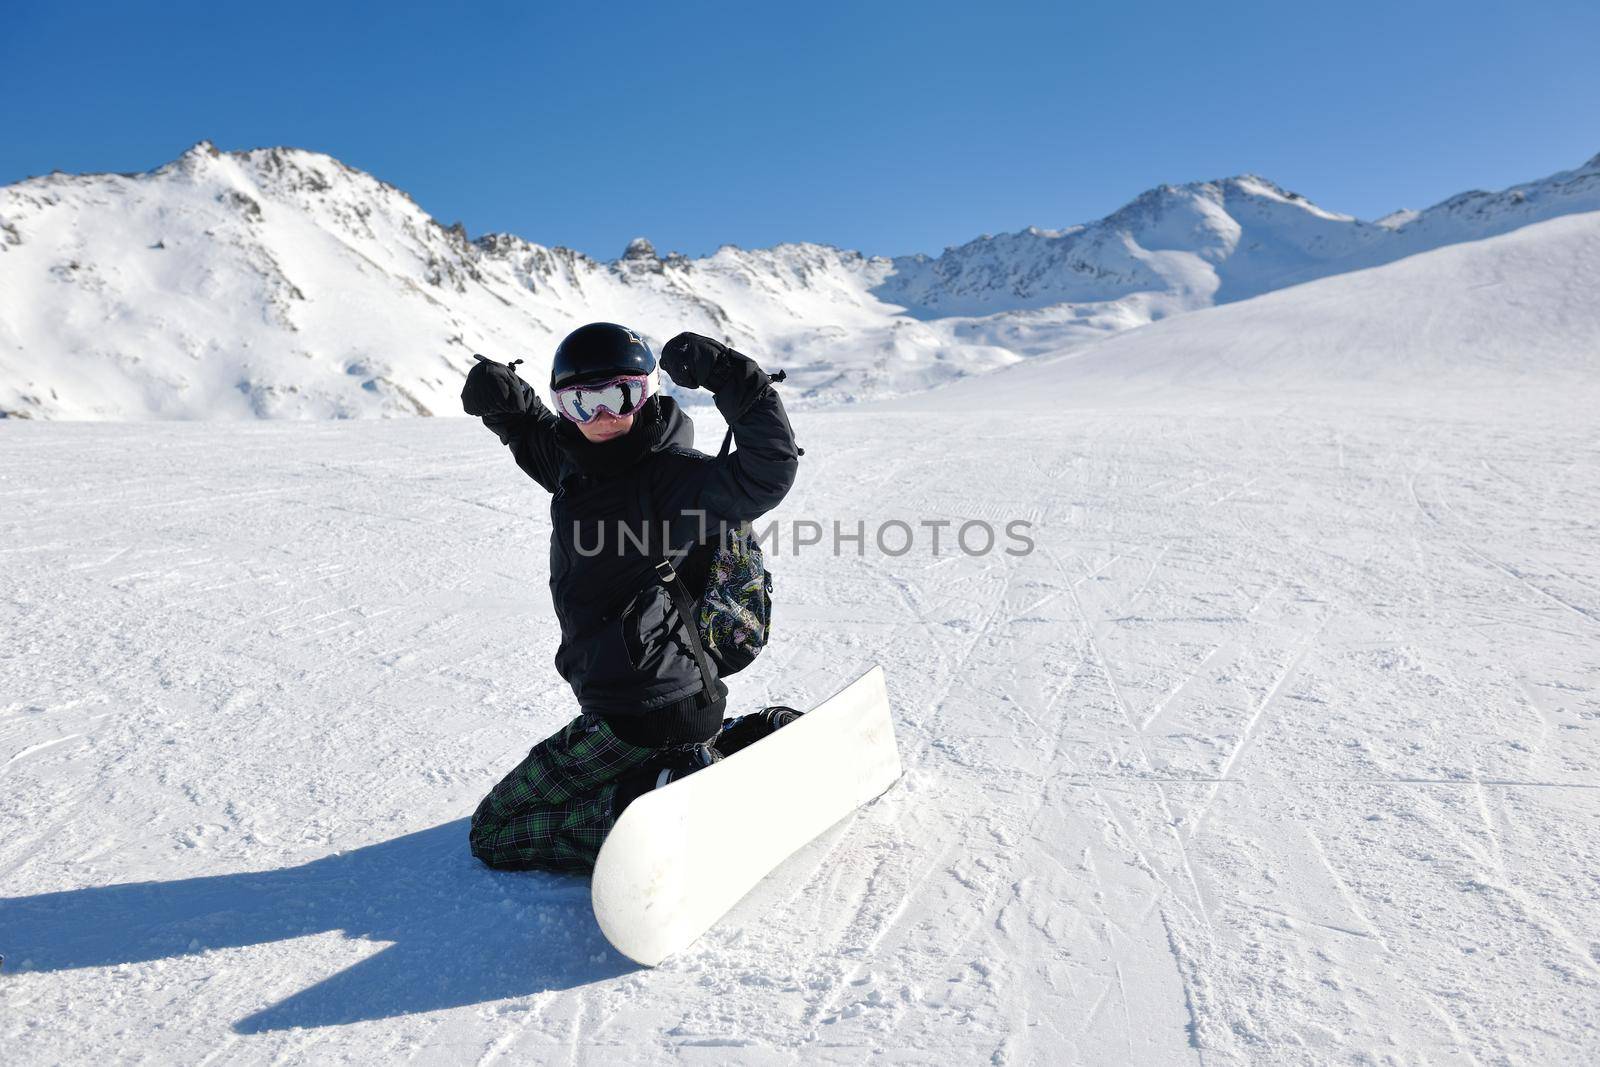 skiing on fresh snow at winter season at beautiful sunny day by dotshock